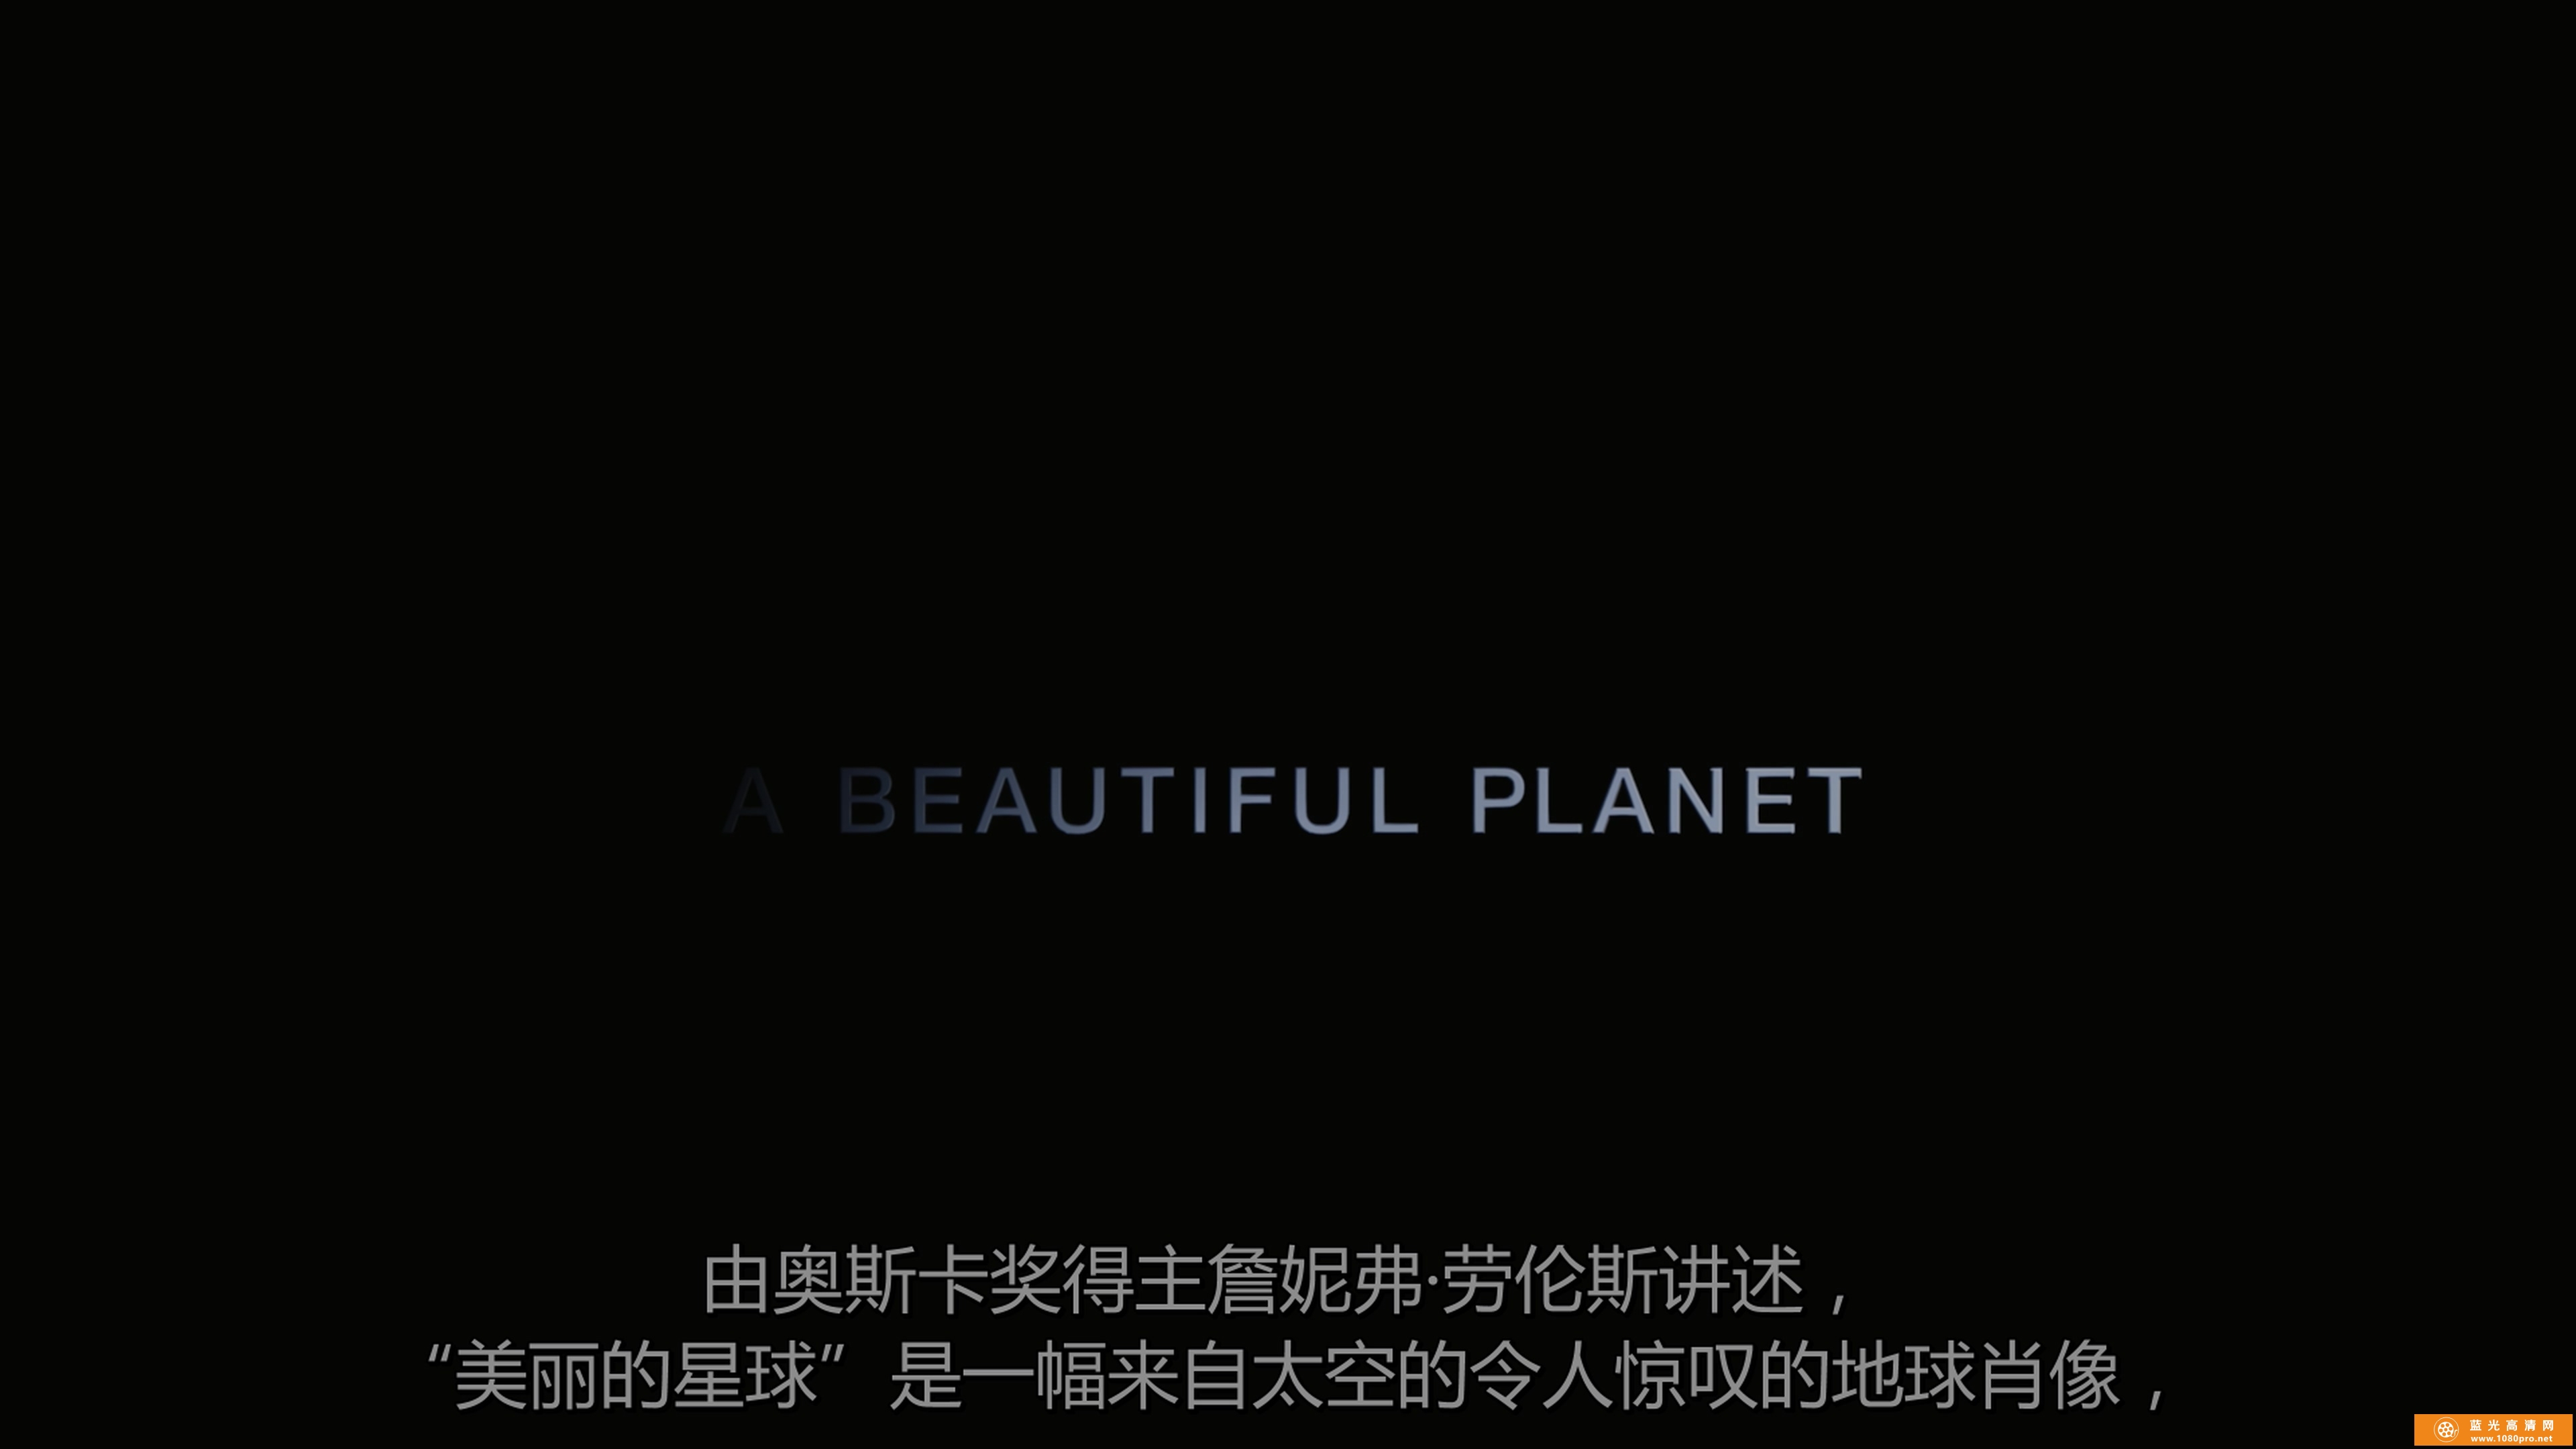 美丽星球4k A Beautiful Planet 2016 2160p UHD BluRay HDR10+ HEVC DTS-X 蓝光原盘